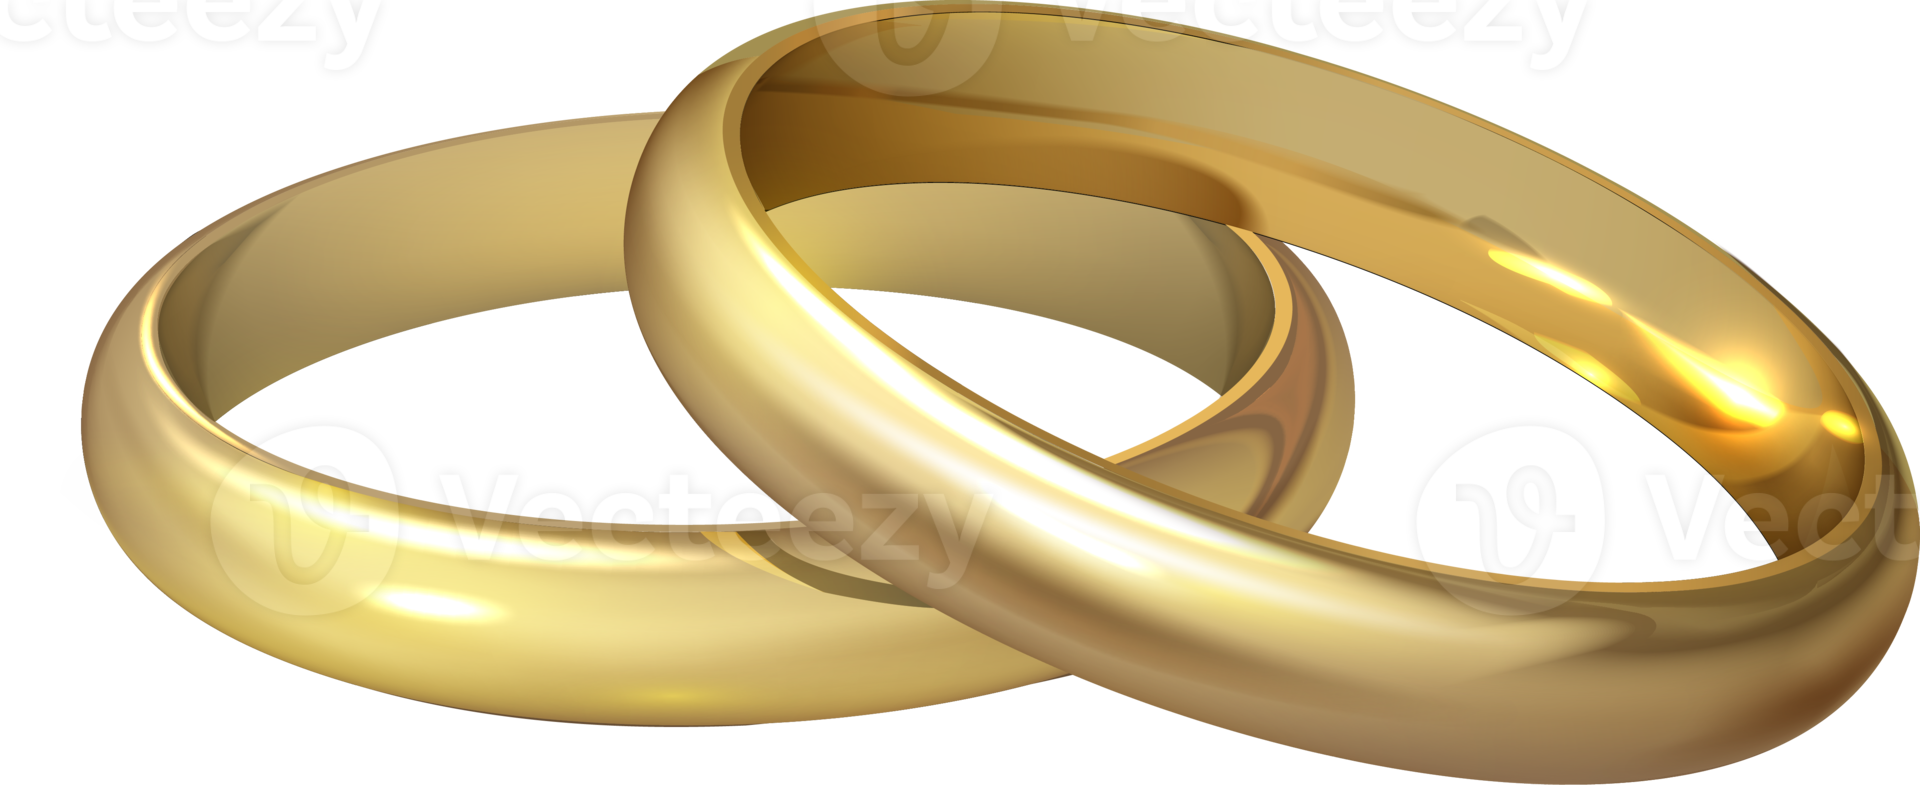 Pair of gold wedding rings png